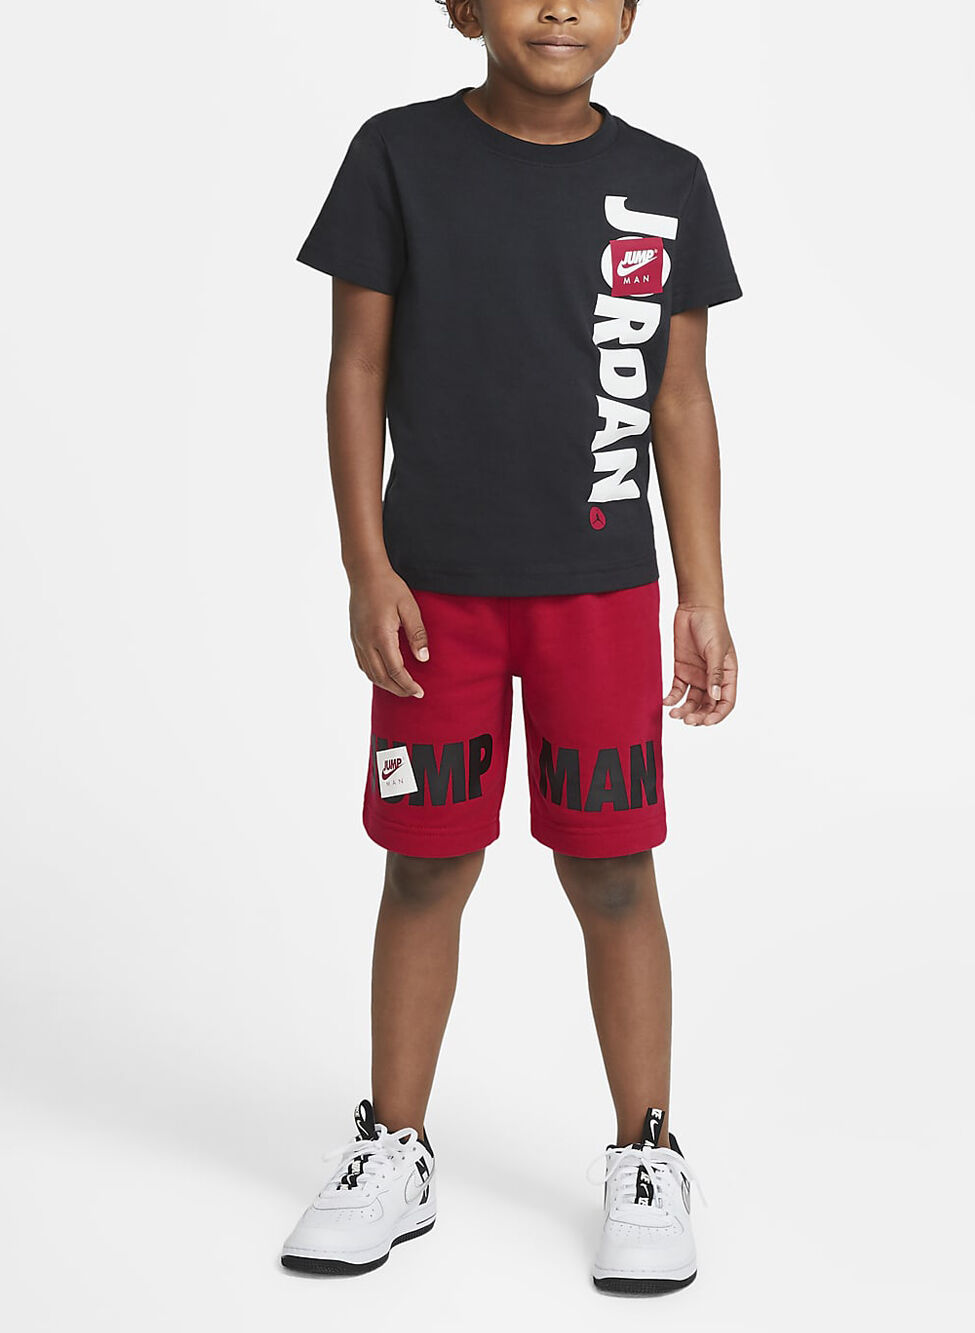 Set di t-shirt e pantaloni Raglan per bambini JordanJordan Jumpman taglia 6 colore: Nero/Blu 